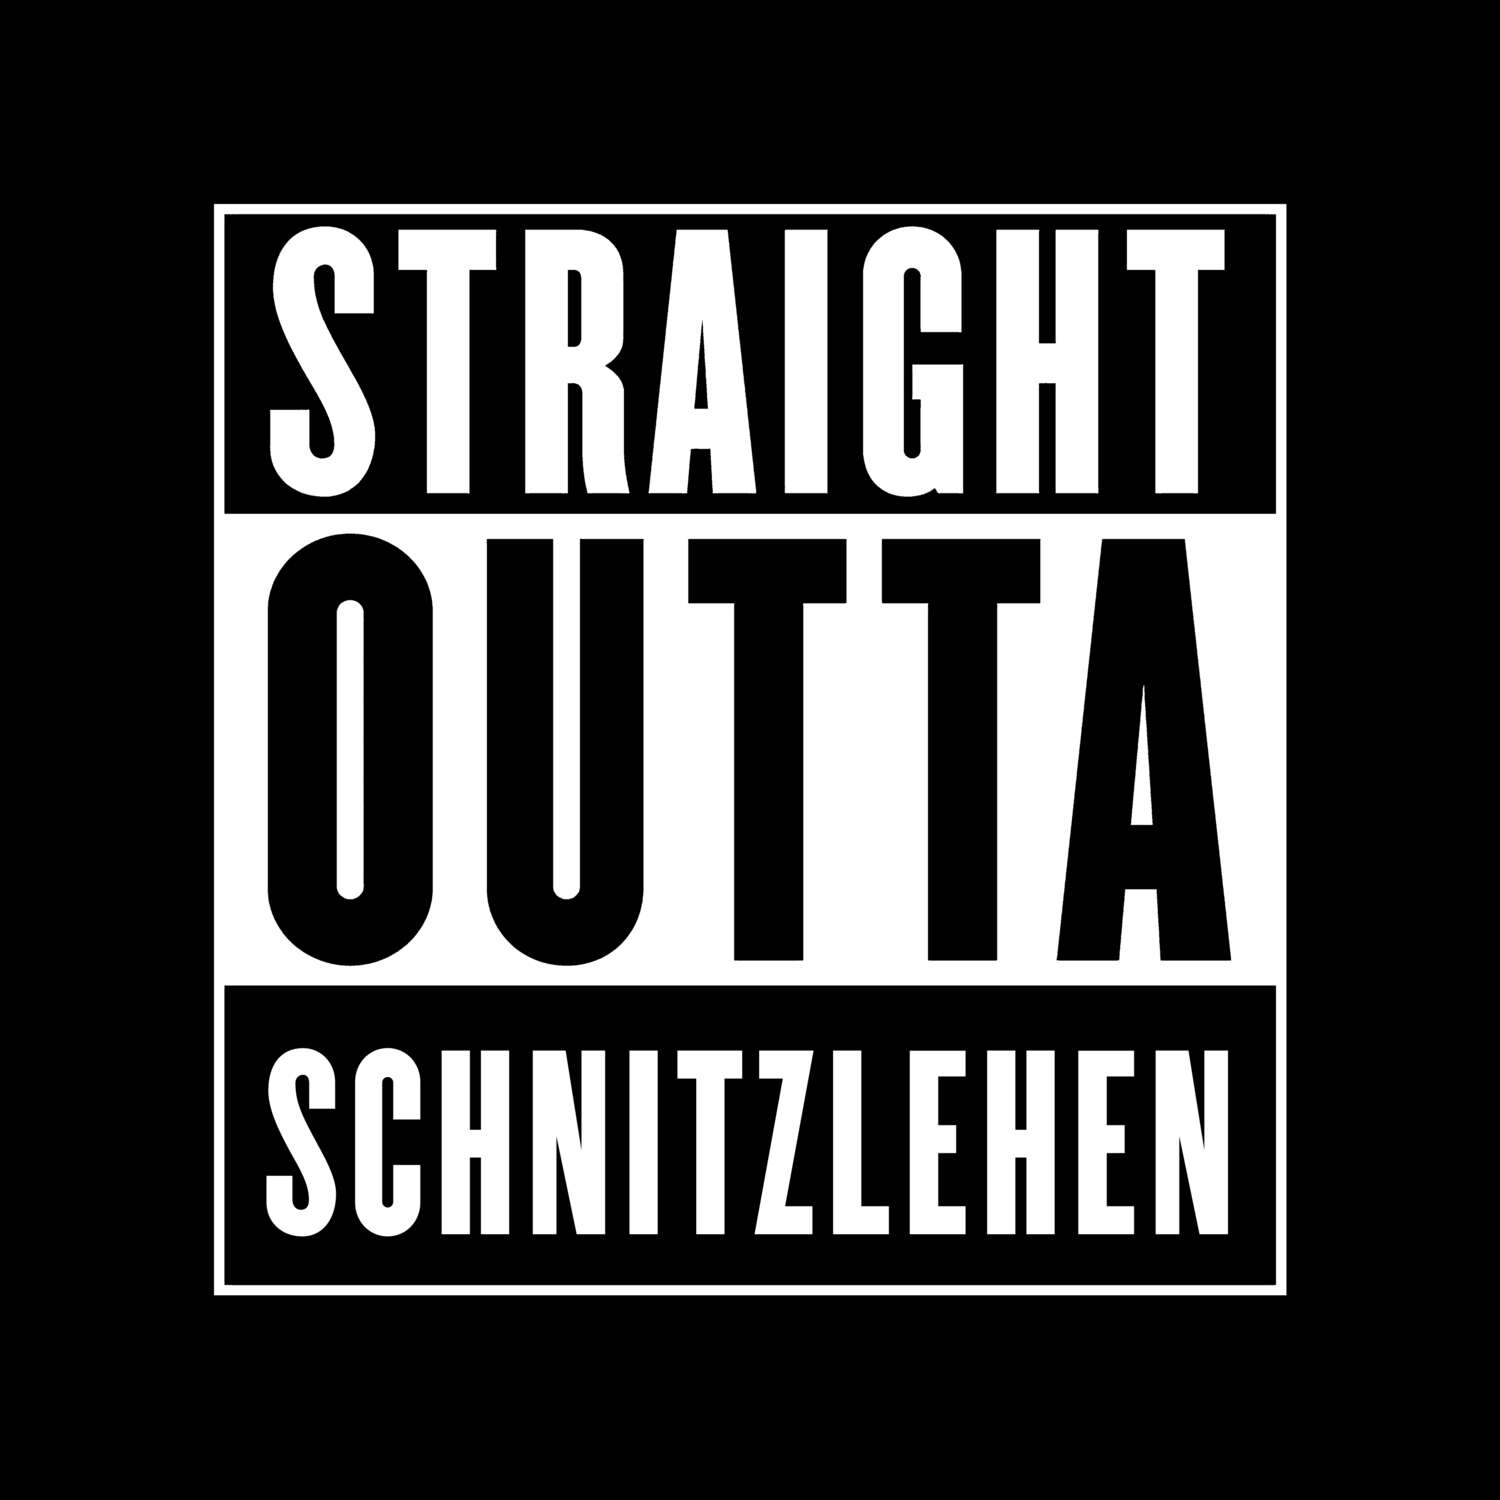 Schnitzlehen T-Shirt »Straight Outta«